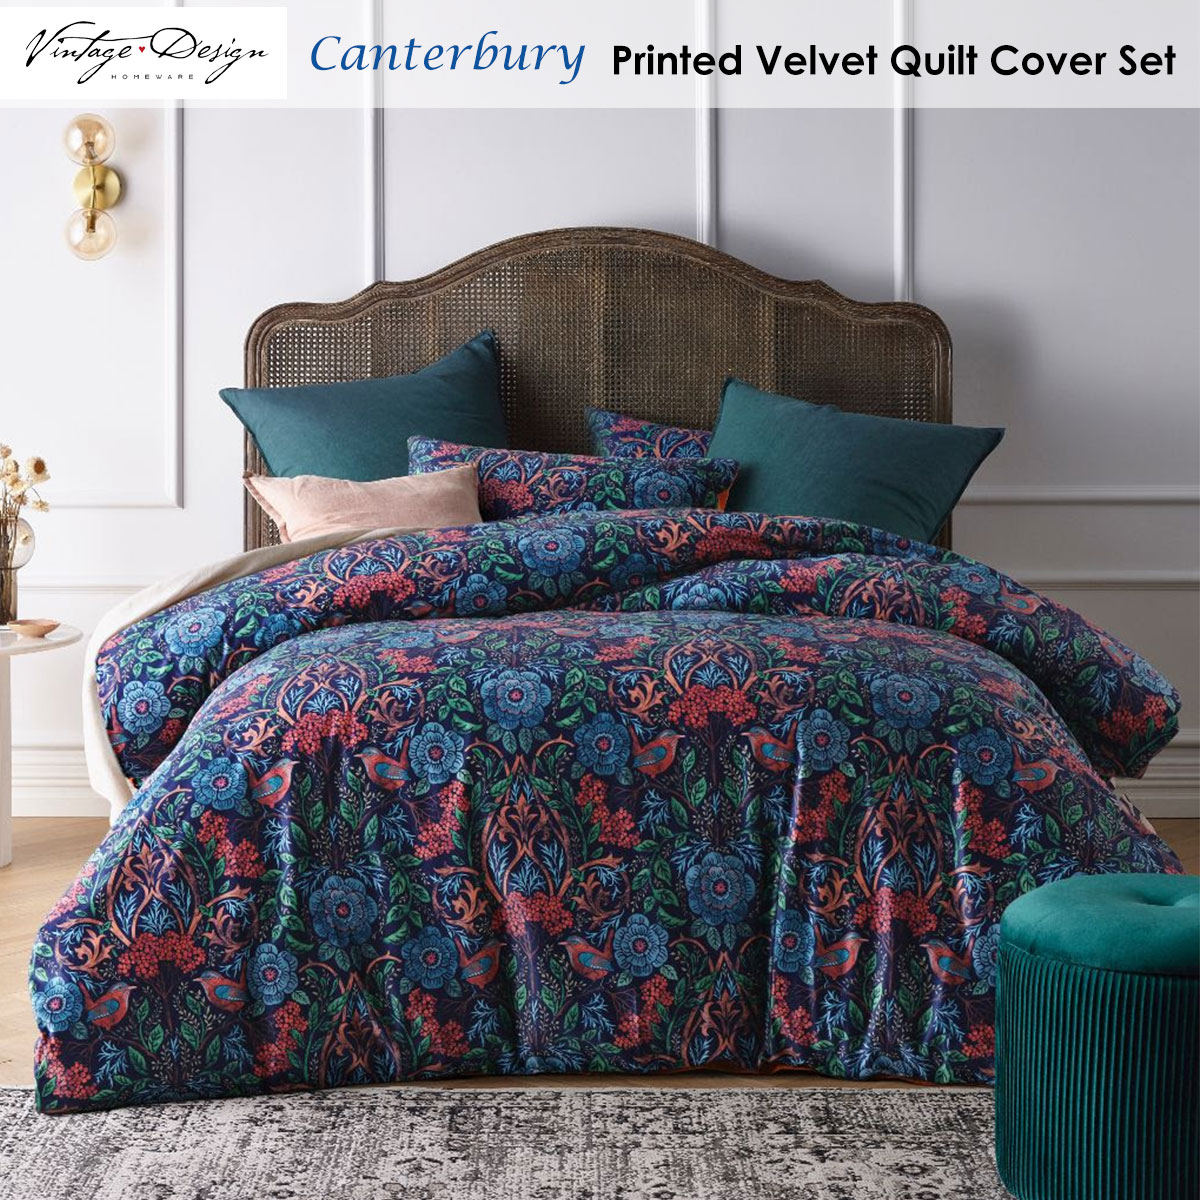 Canterbury Printed Velvet Quilt Cover Set by Vintage Design Homeware